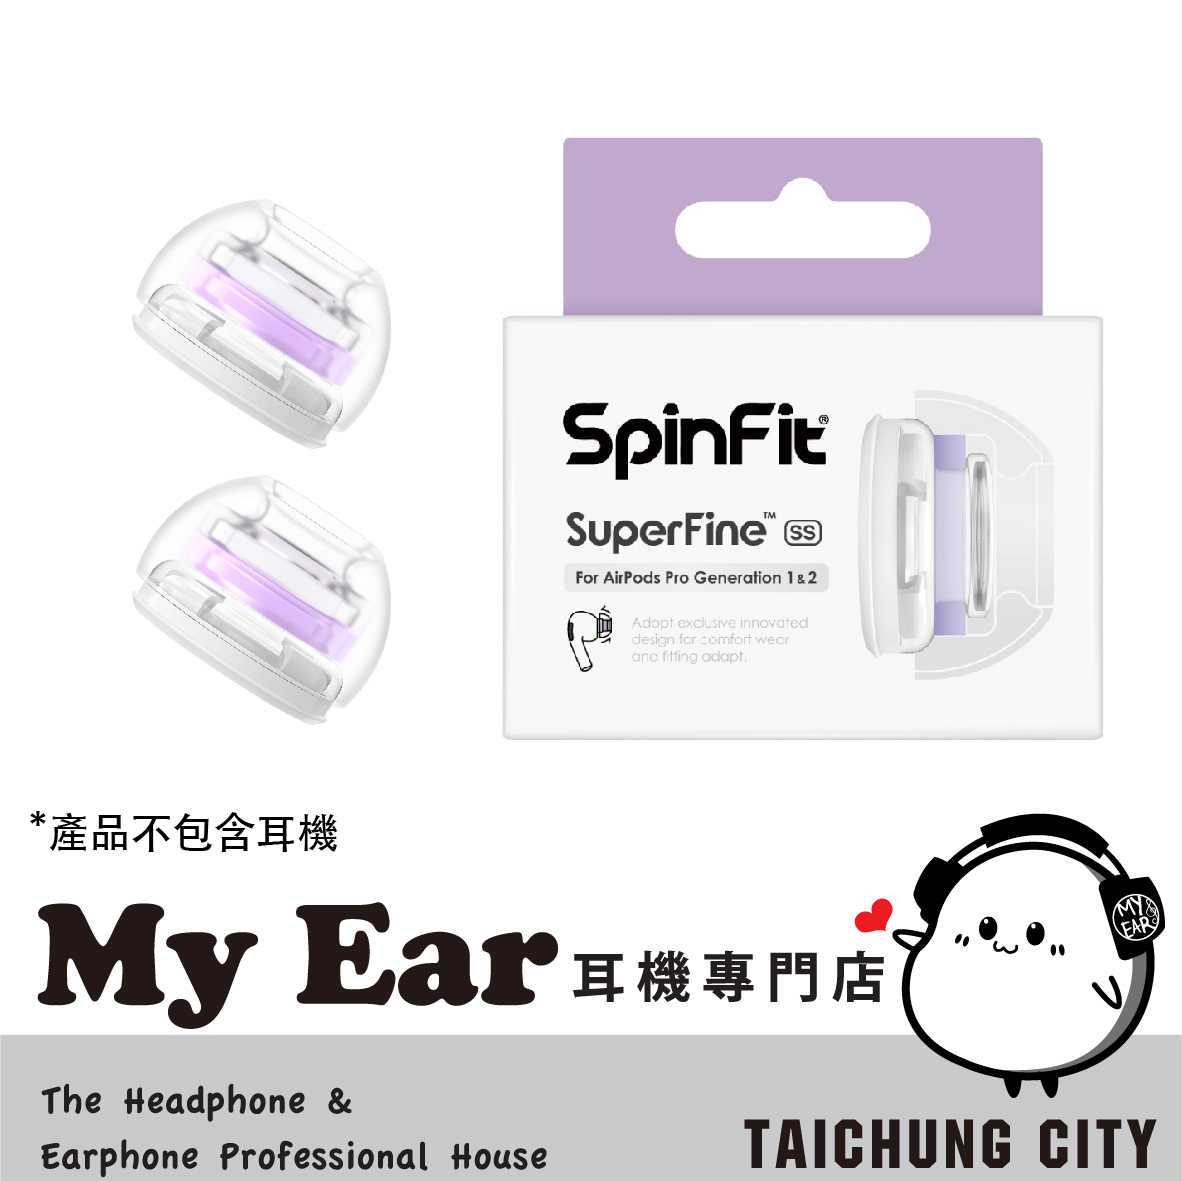 SpinFit SuperFine SS 適用Airpods Pro CP1025 矽膠耳塞 | My Ear耳機專門店